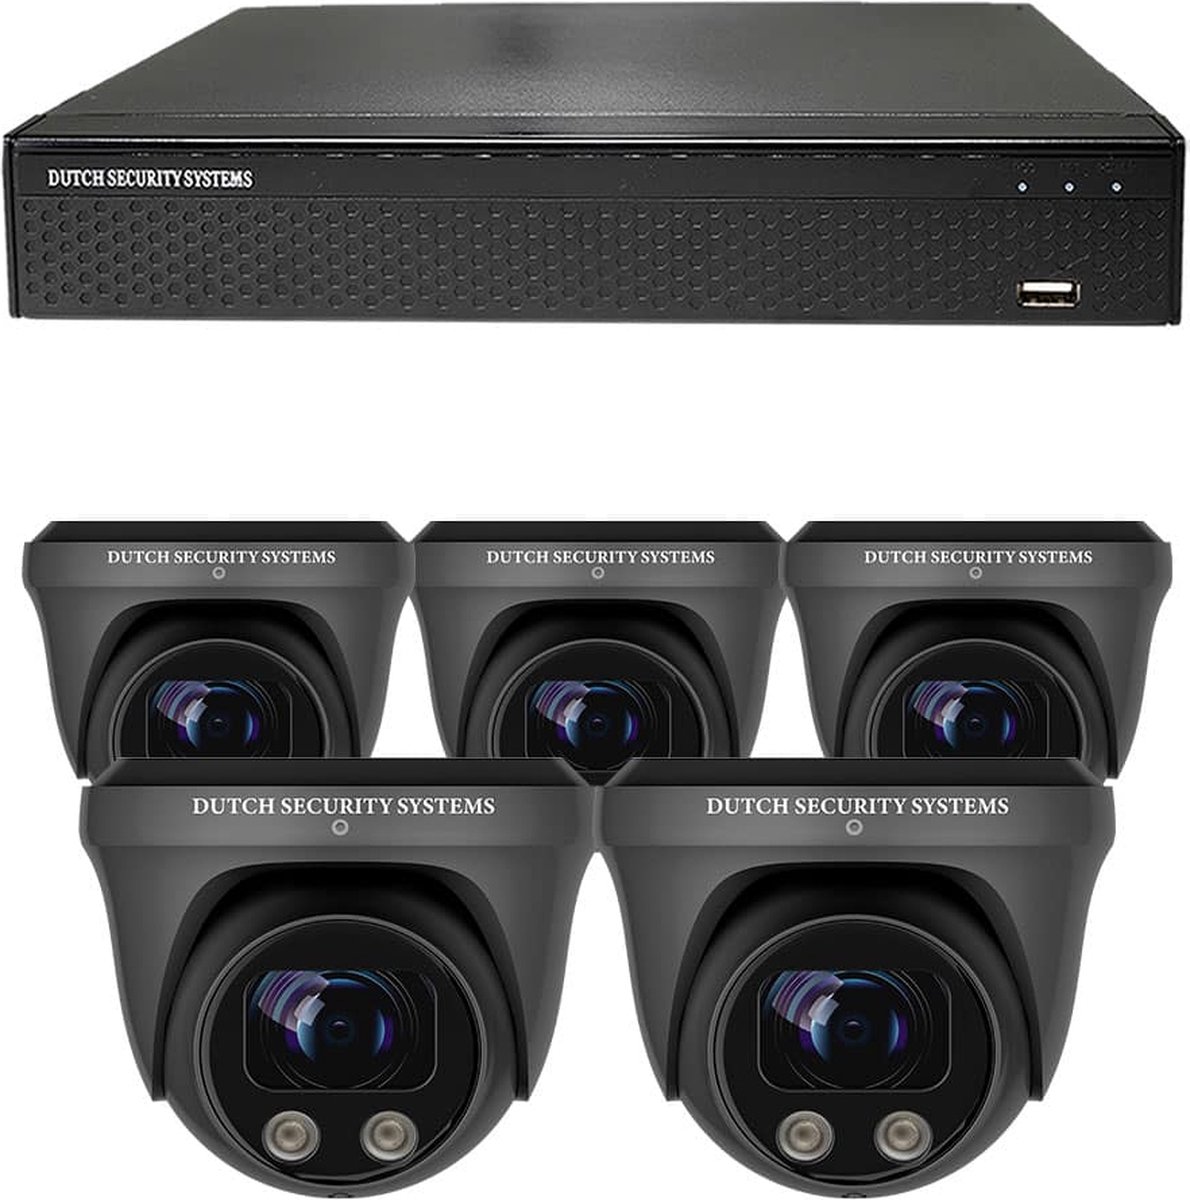 Beveiligingscamera Set - 5x PRO Dome Camera - QHD 2K - Sony 5MP - Zwart - Buiten & Binnen - Met Nachtzicht - Incl. Recorder & App